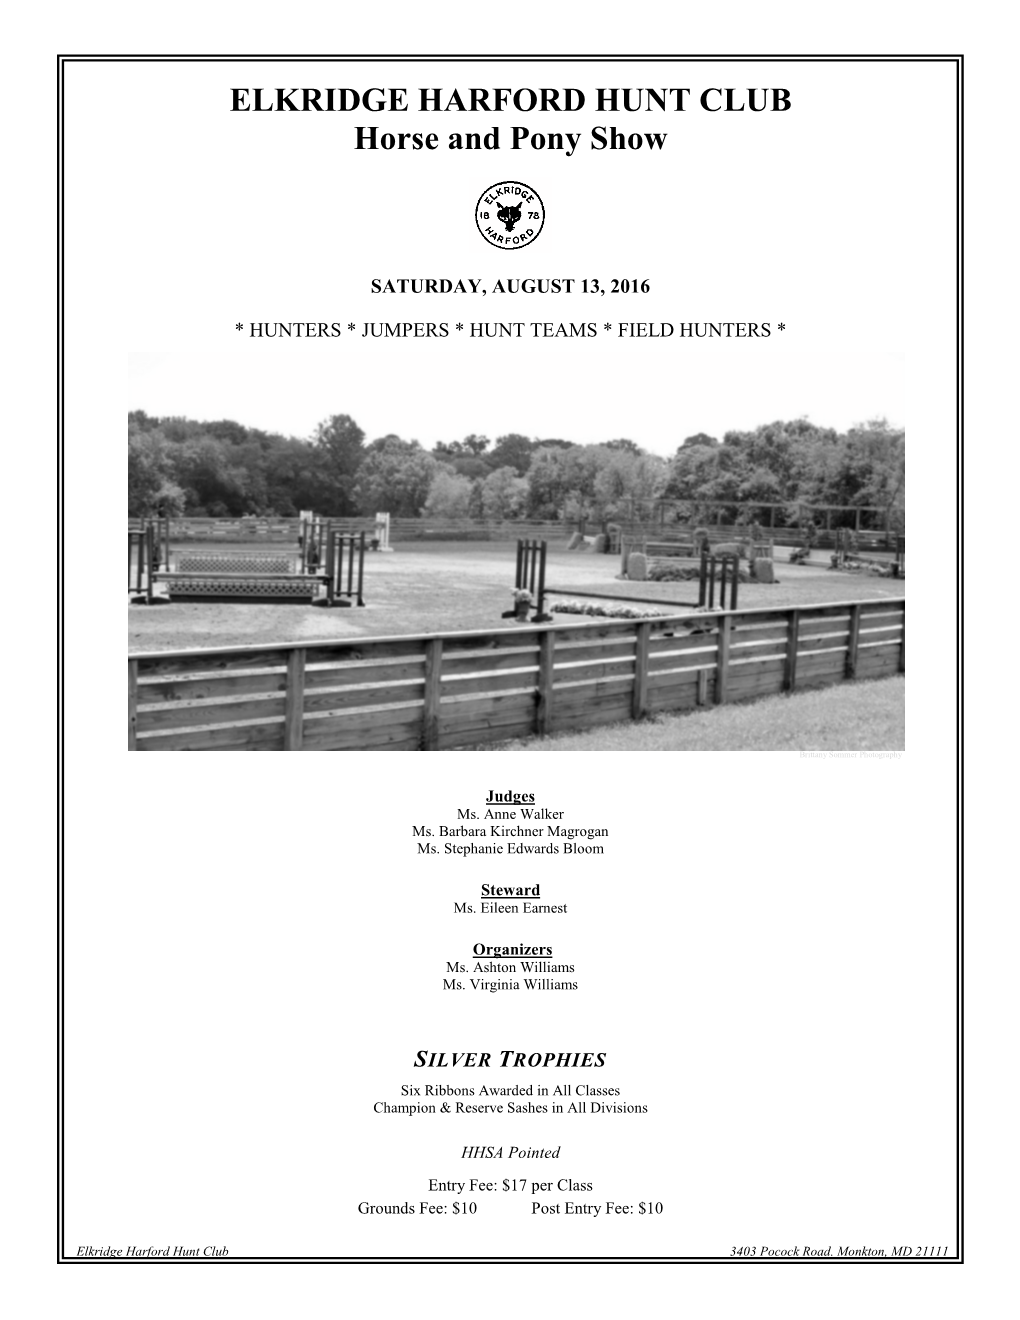 ELKRIDGE HARFORD HUNT CLUB Horse and Pony Show